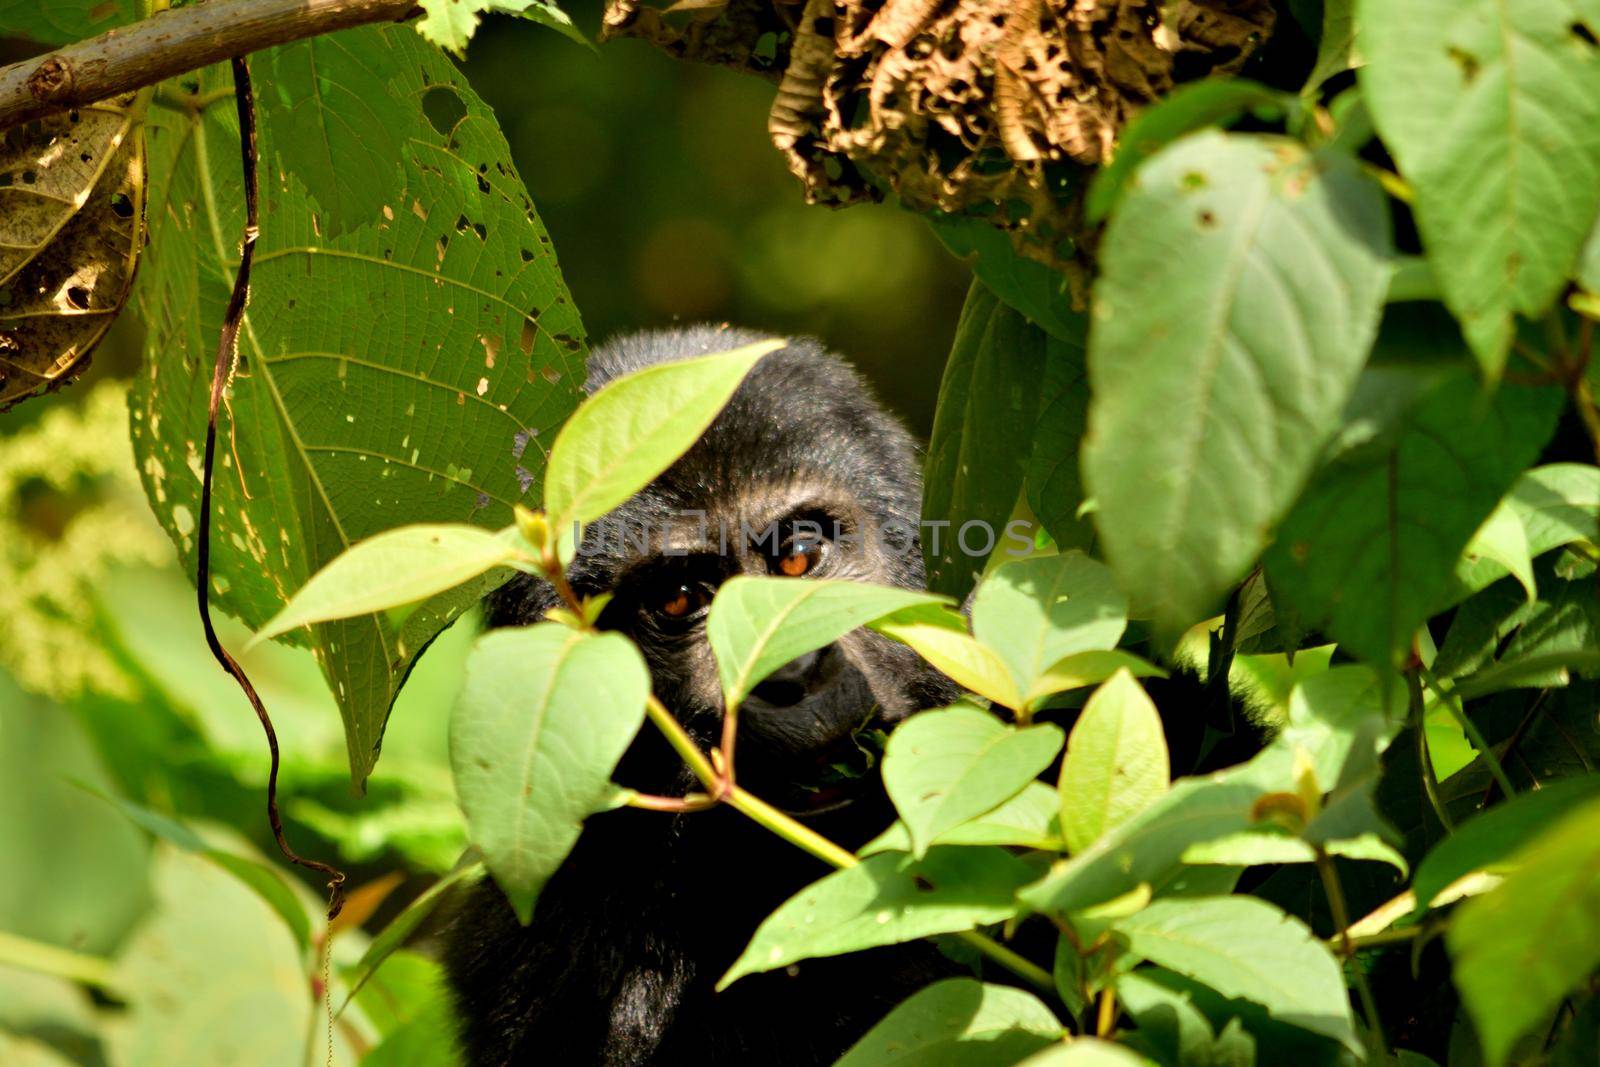 Closeup of a mountain gorilla cub eating foliage in the Bwindi Impenetrable Forest, Uganda